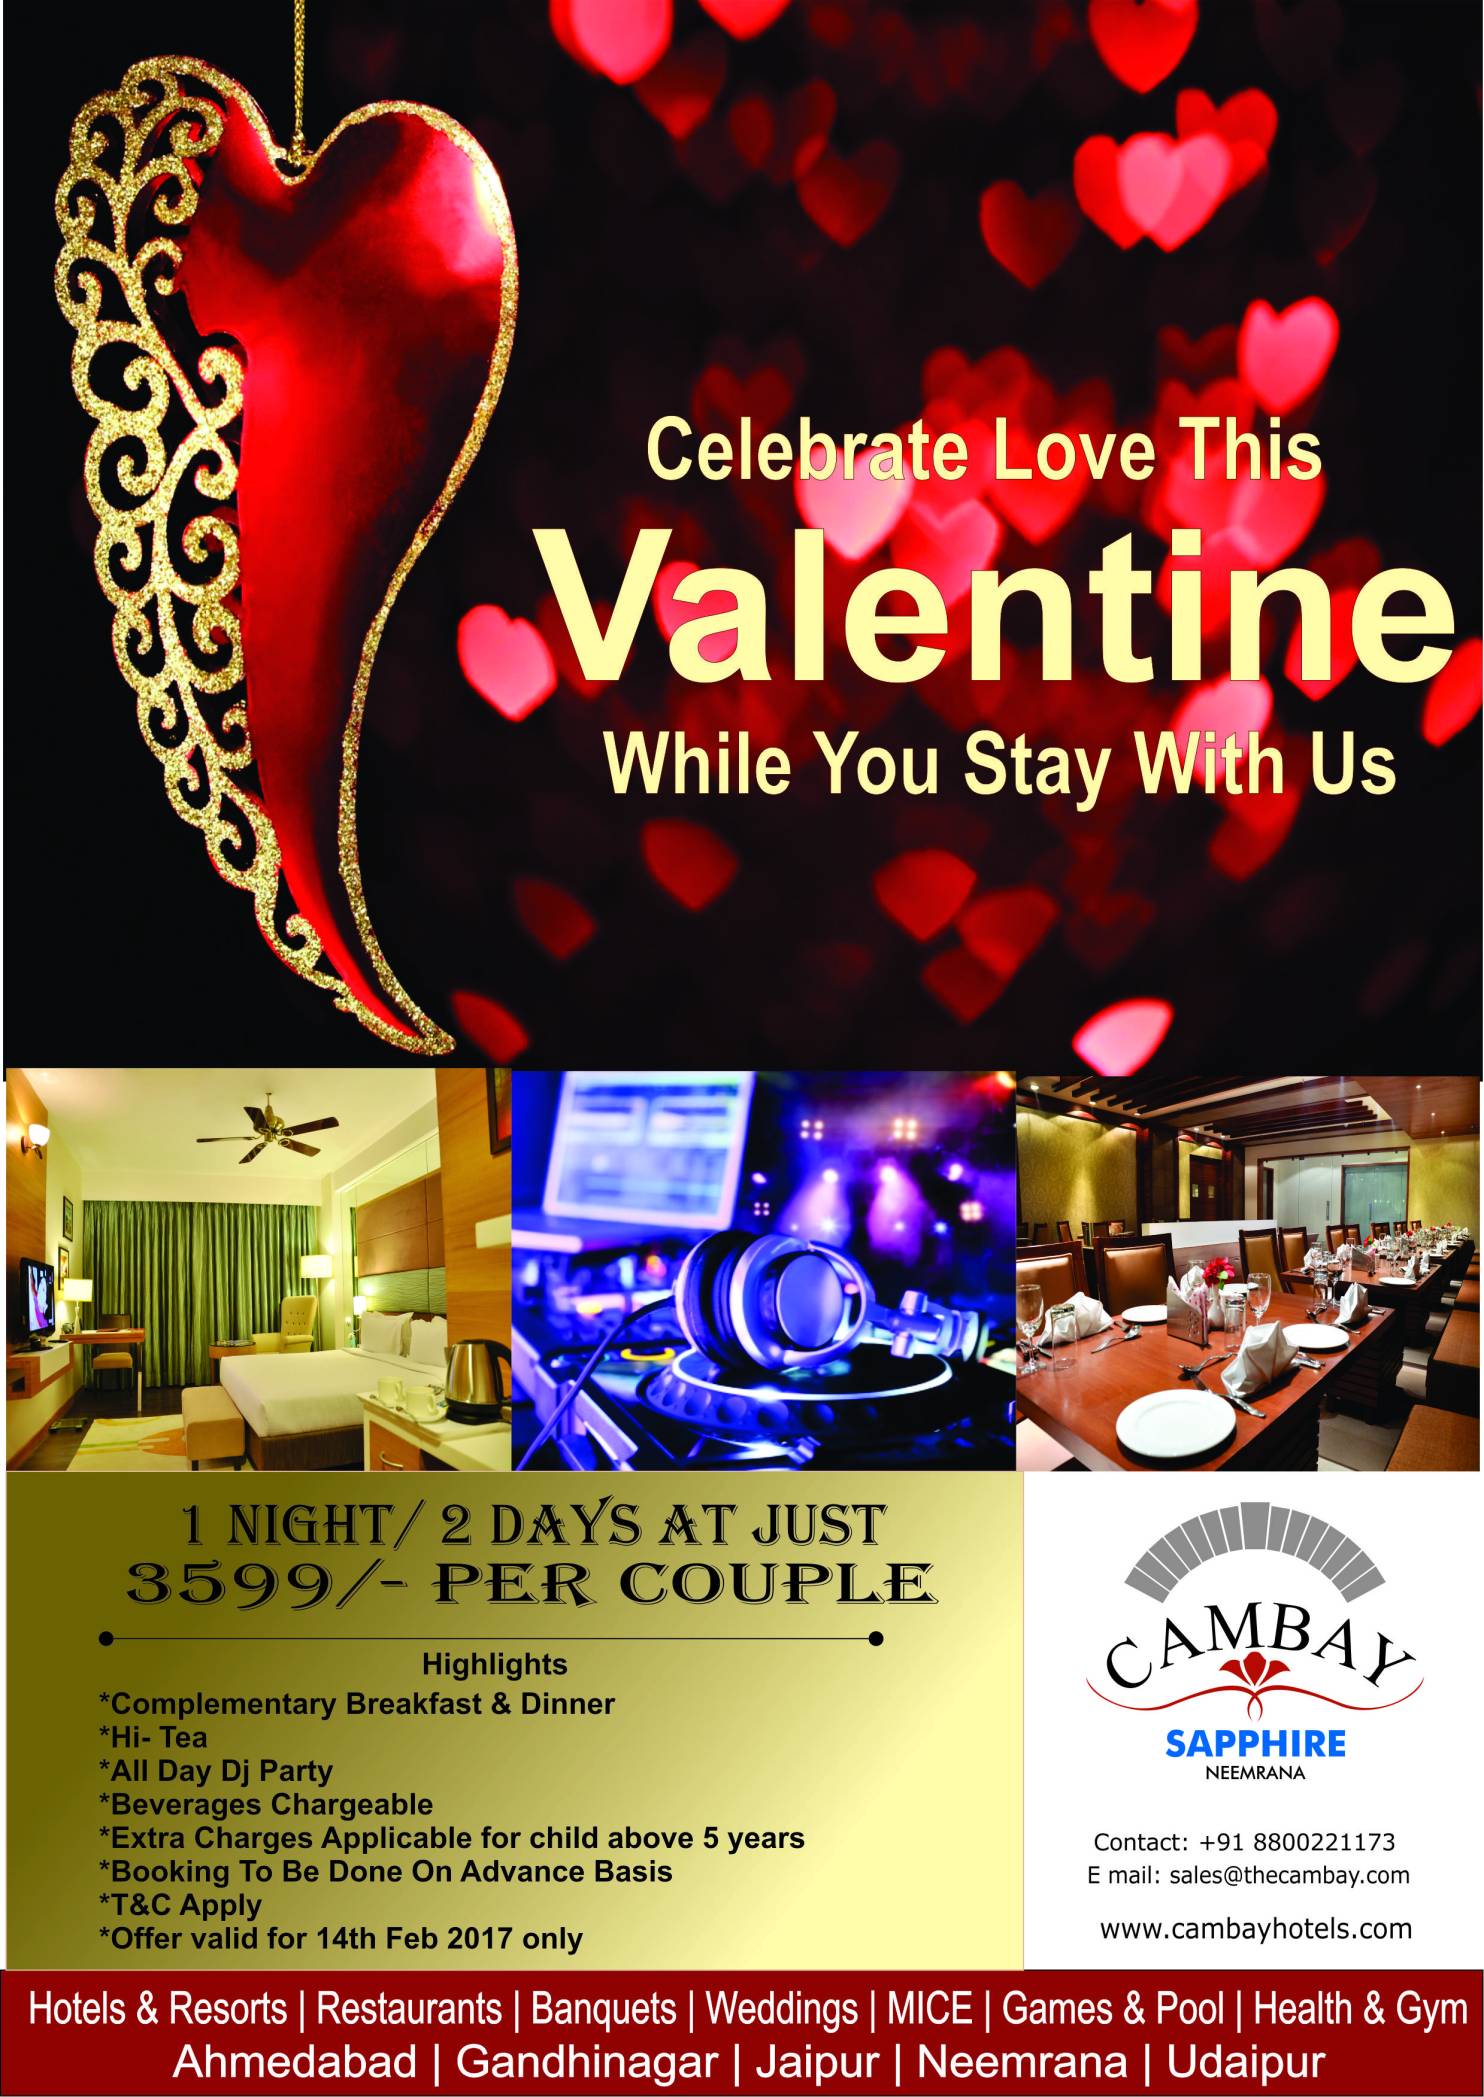 Celebrate Valentine Day With Luxury Accomodation - Cambay Sapphire Neemrana.jpg